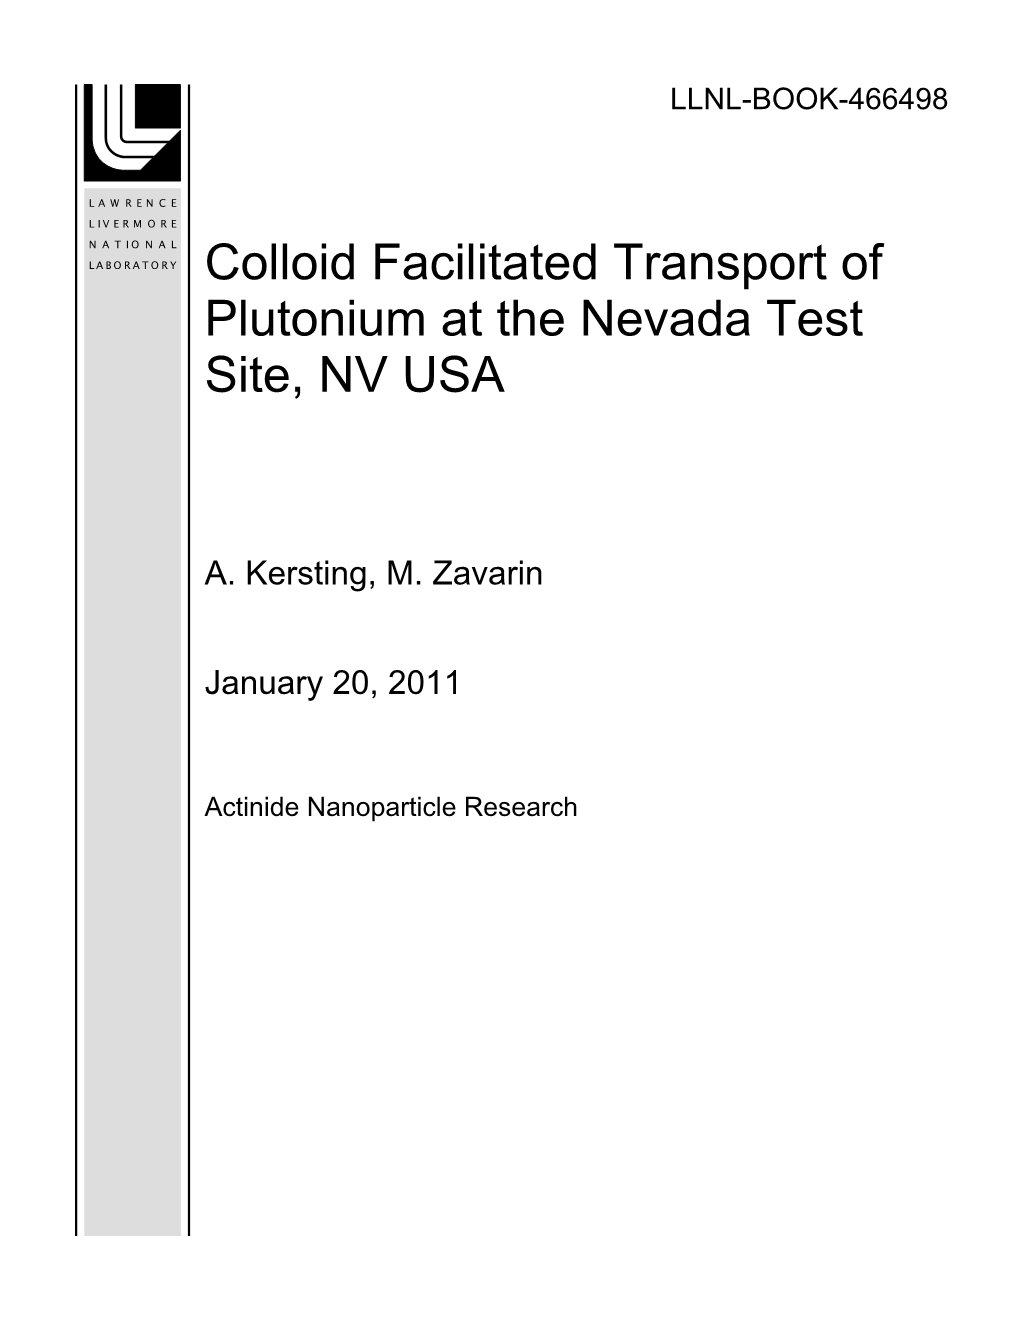 Colloid Facilitated Transport of Plutonium at the Nevada Test Site, NV USA